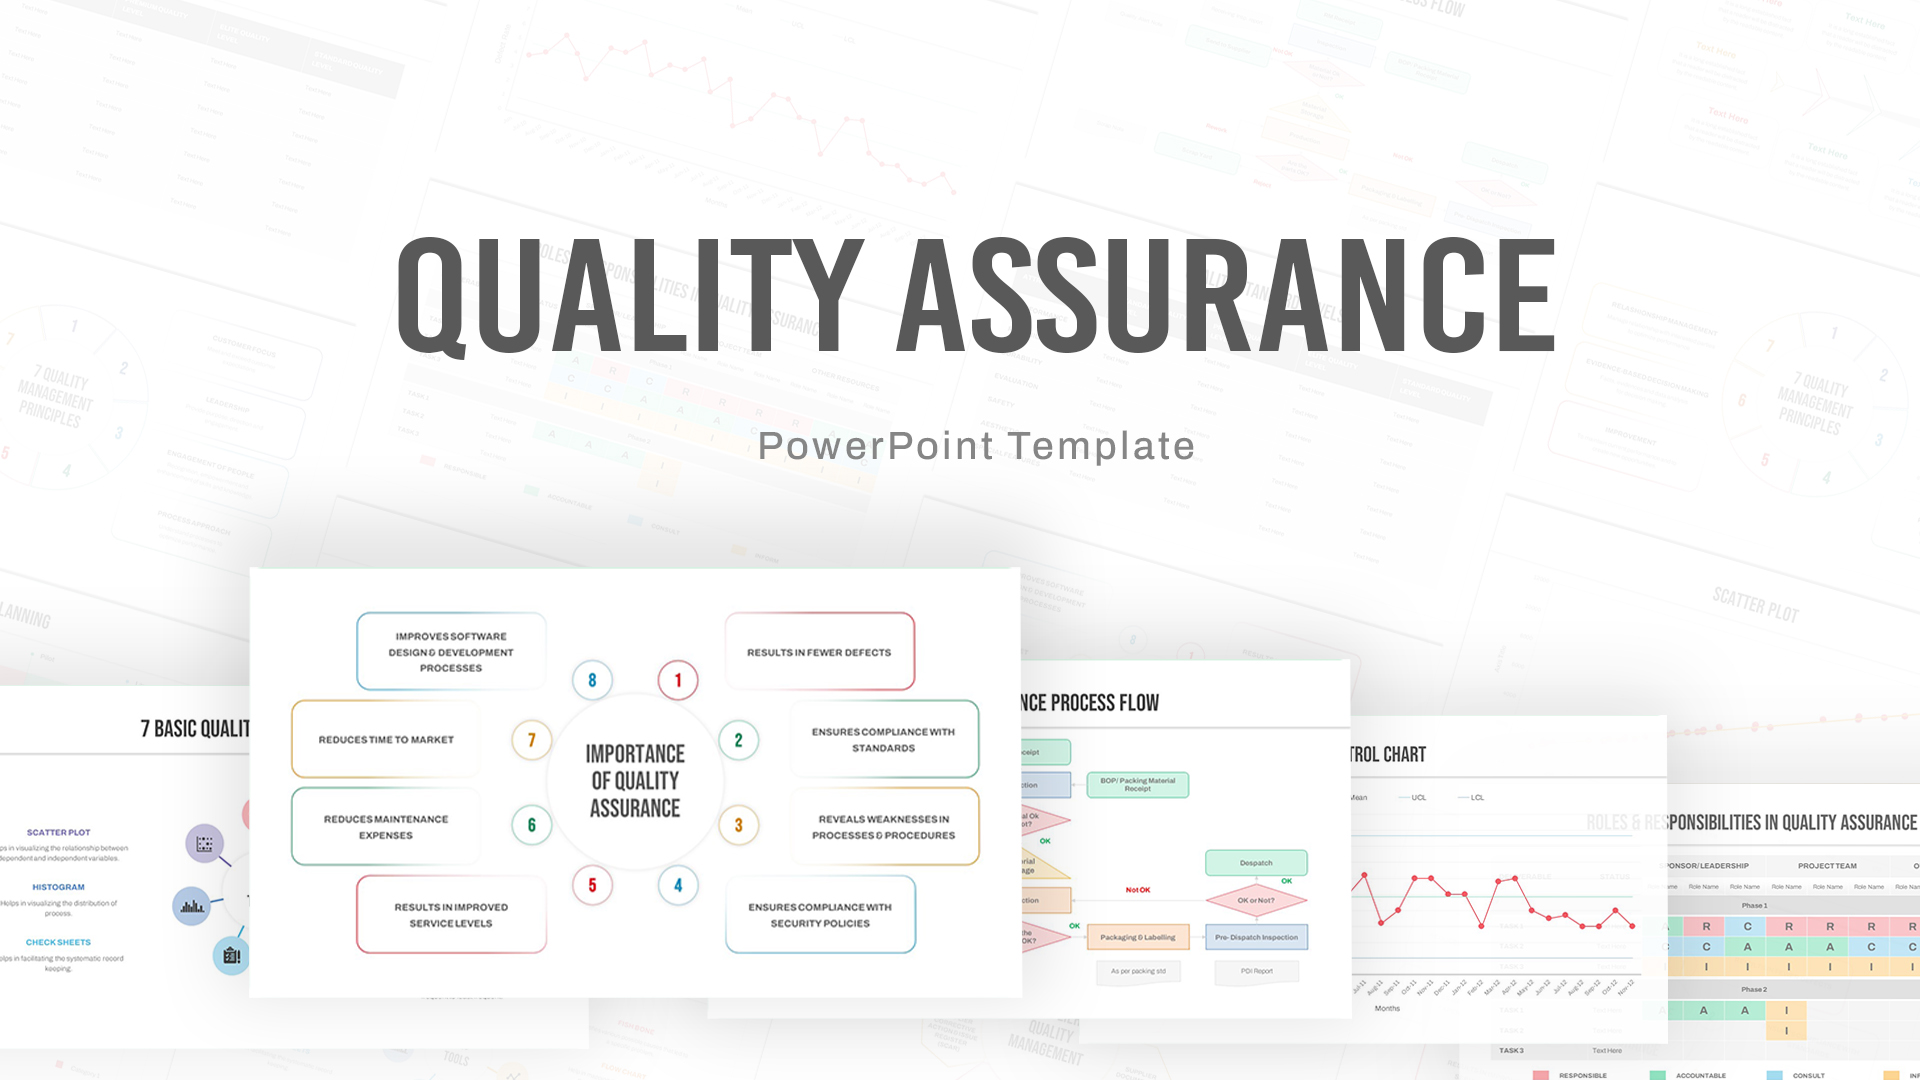 Quality Assurance PowerPoint Deck Template